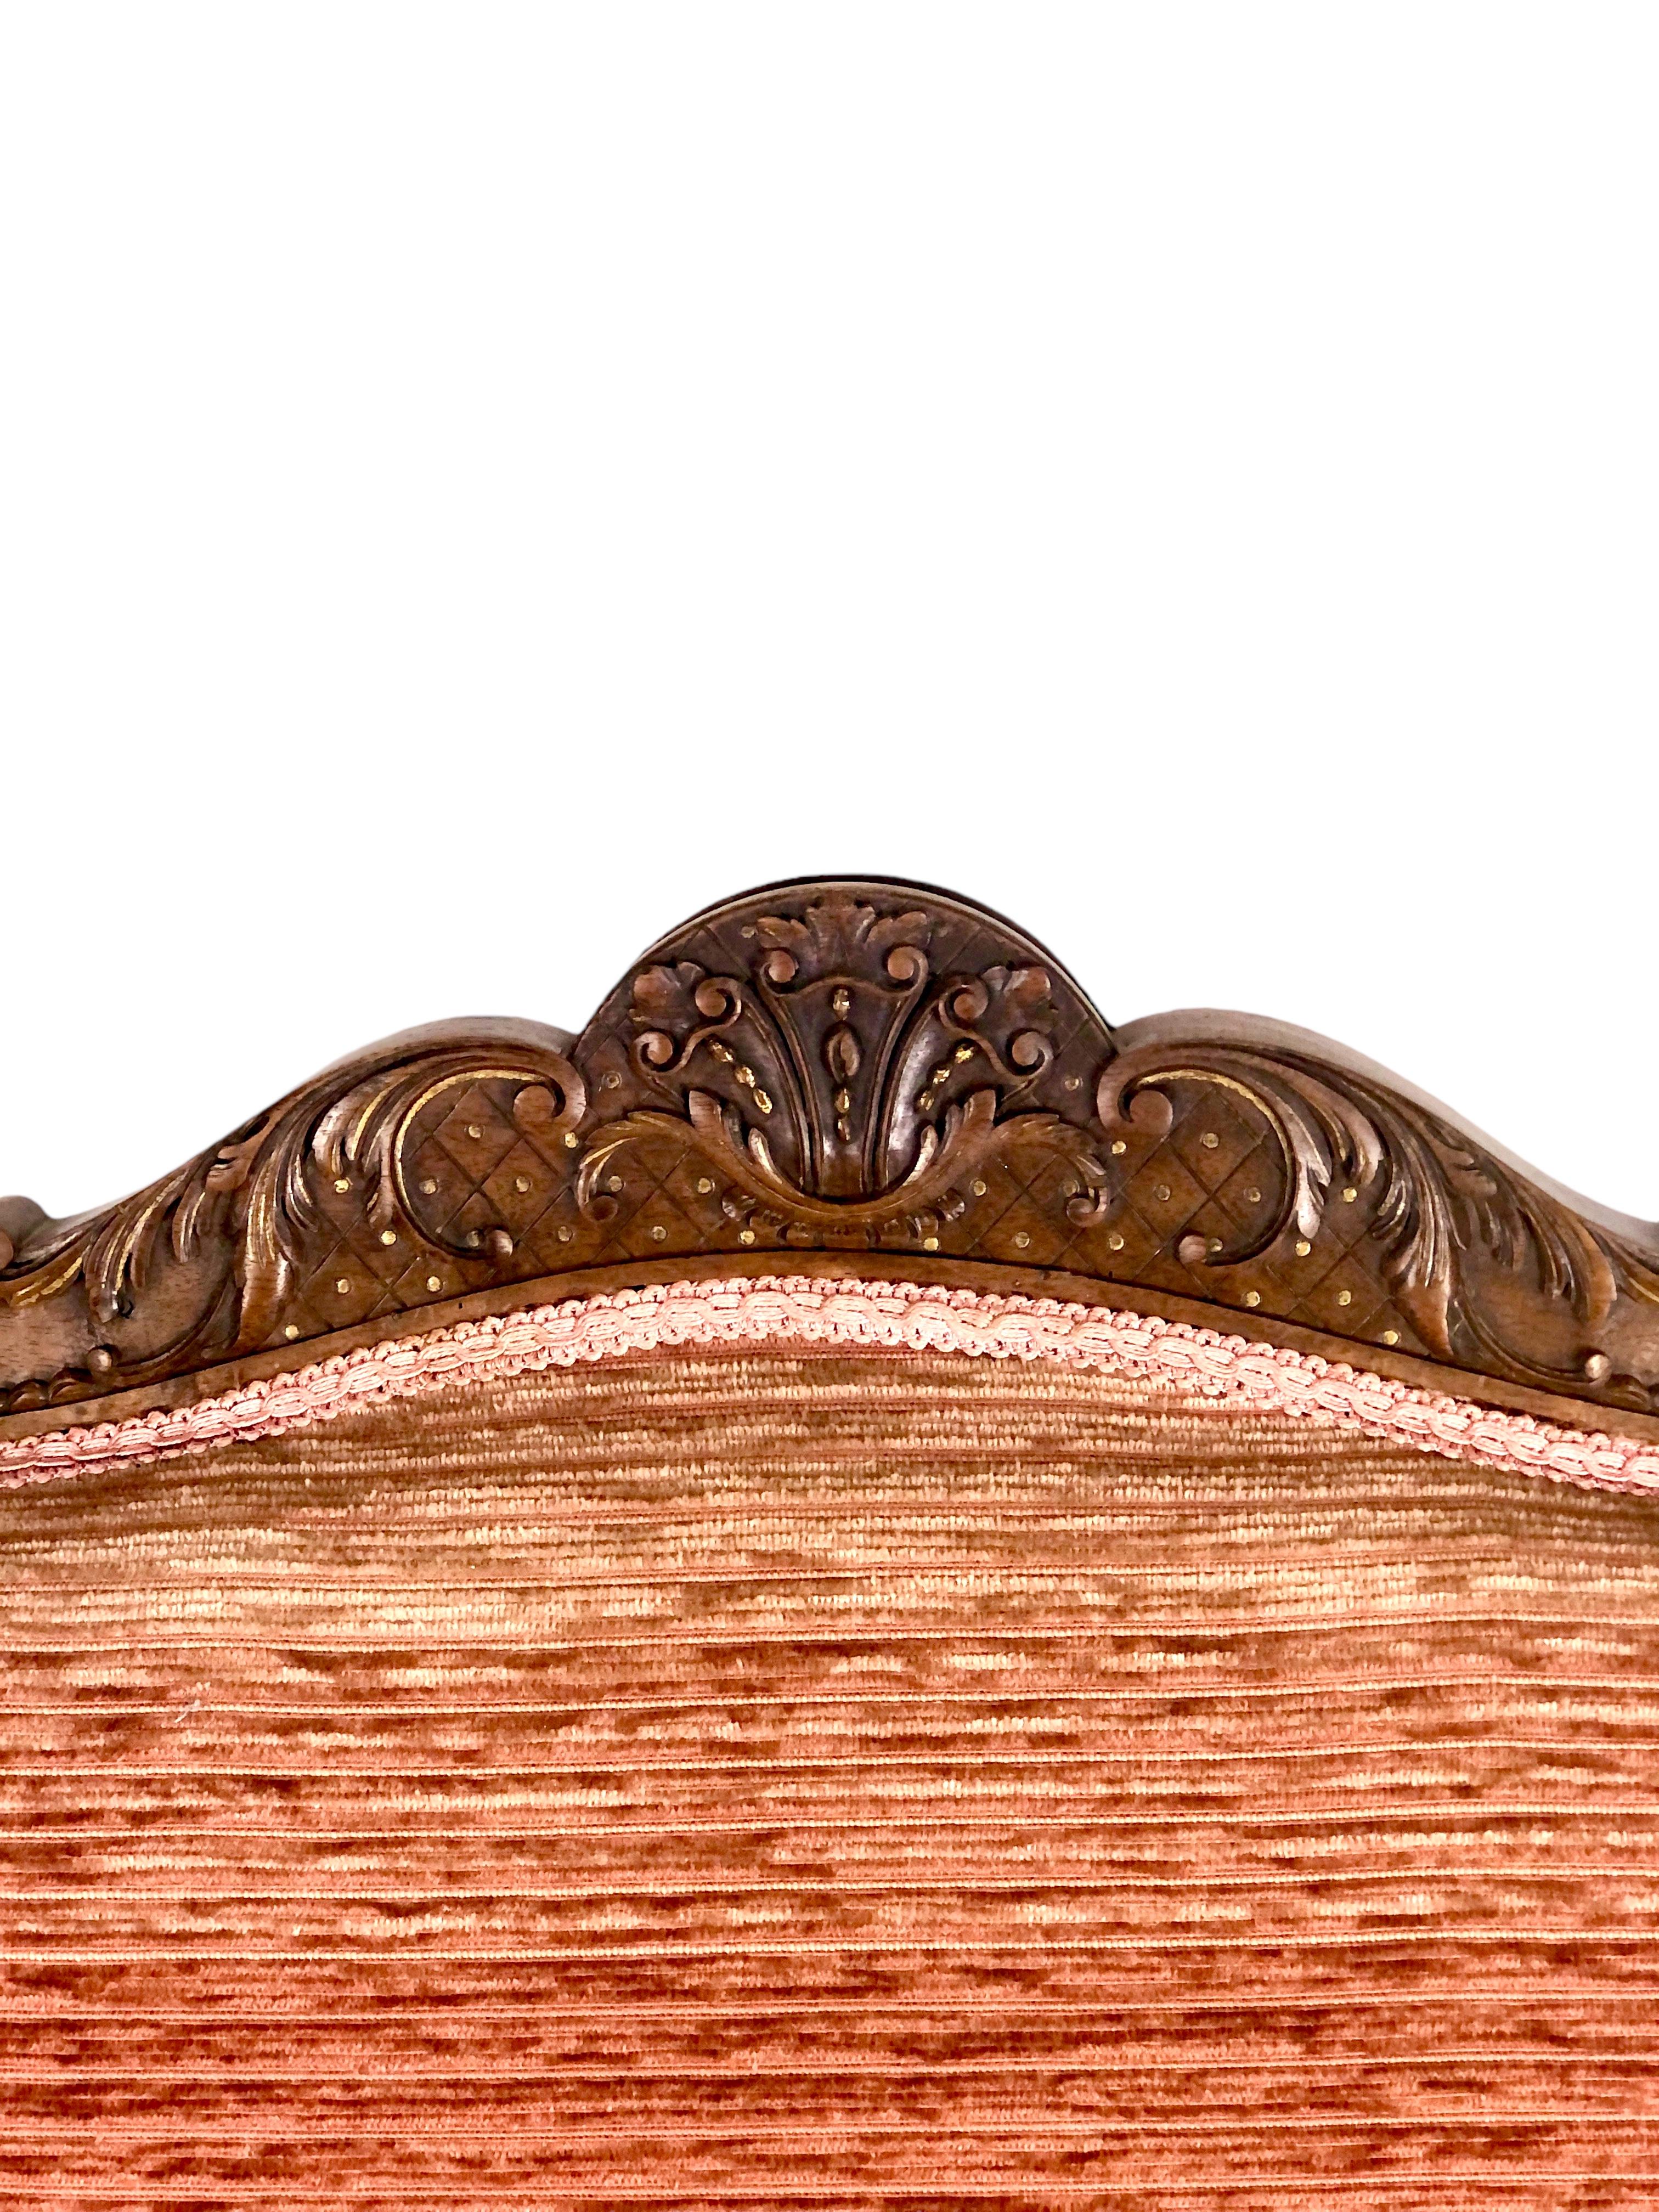 19th Century Pair of Walnut Regency Chairs Called “Fauteuils à La Reine” For Sale 5